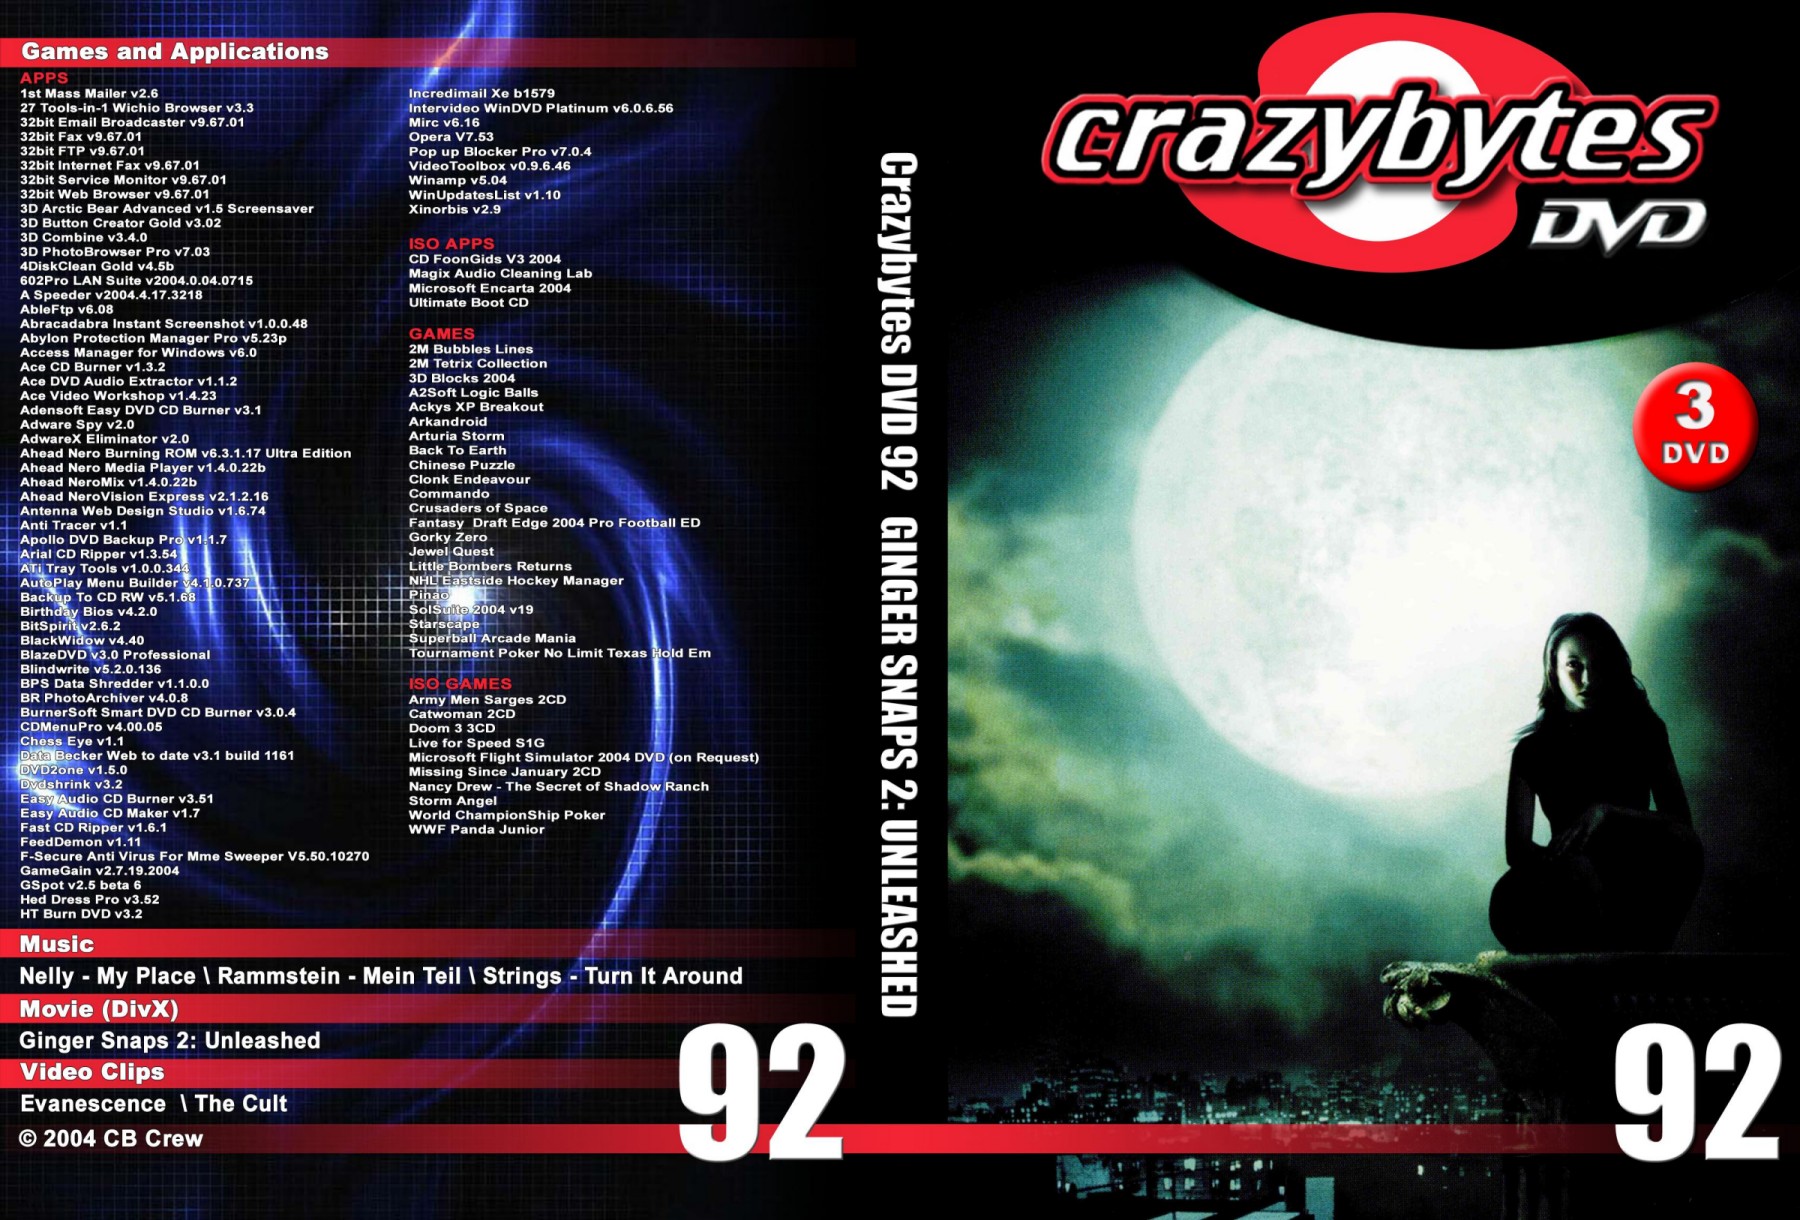 Crazybytes DVD 92 GINGER SNAPS 2 UNLEASHED